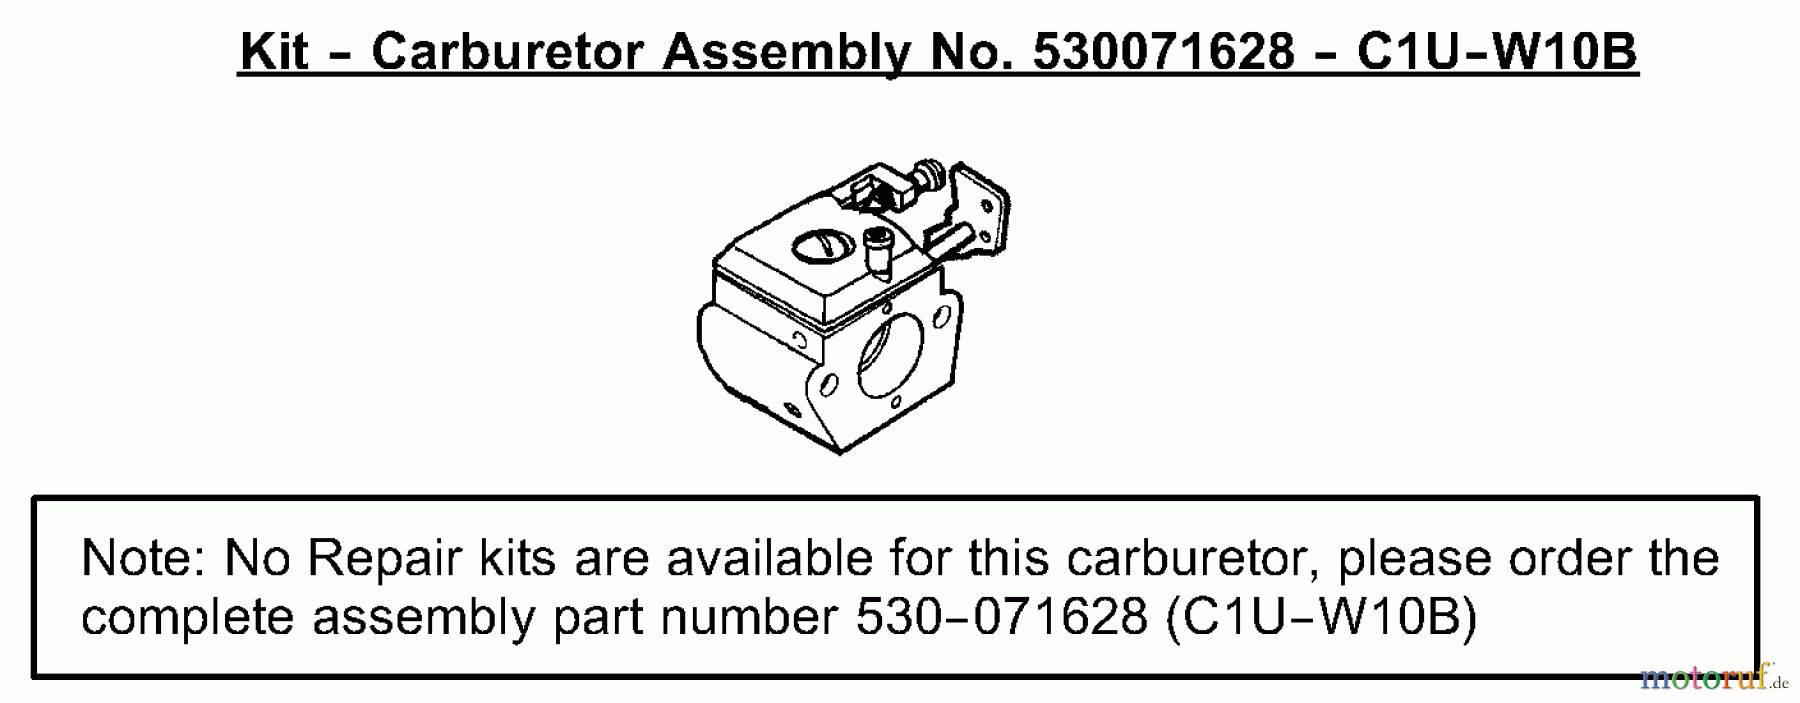  Poulan / Weed Eater Motorsensen, Trimmer SST (Type 3) - Weed Eater Featherlite LE String Trimmer Carburetor Assembly (C1U-W10B) P/N 530071628